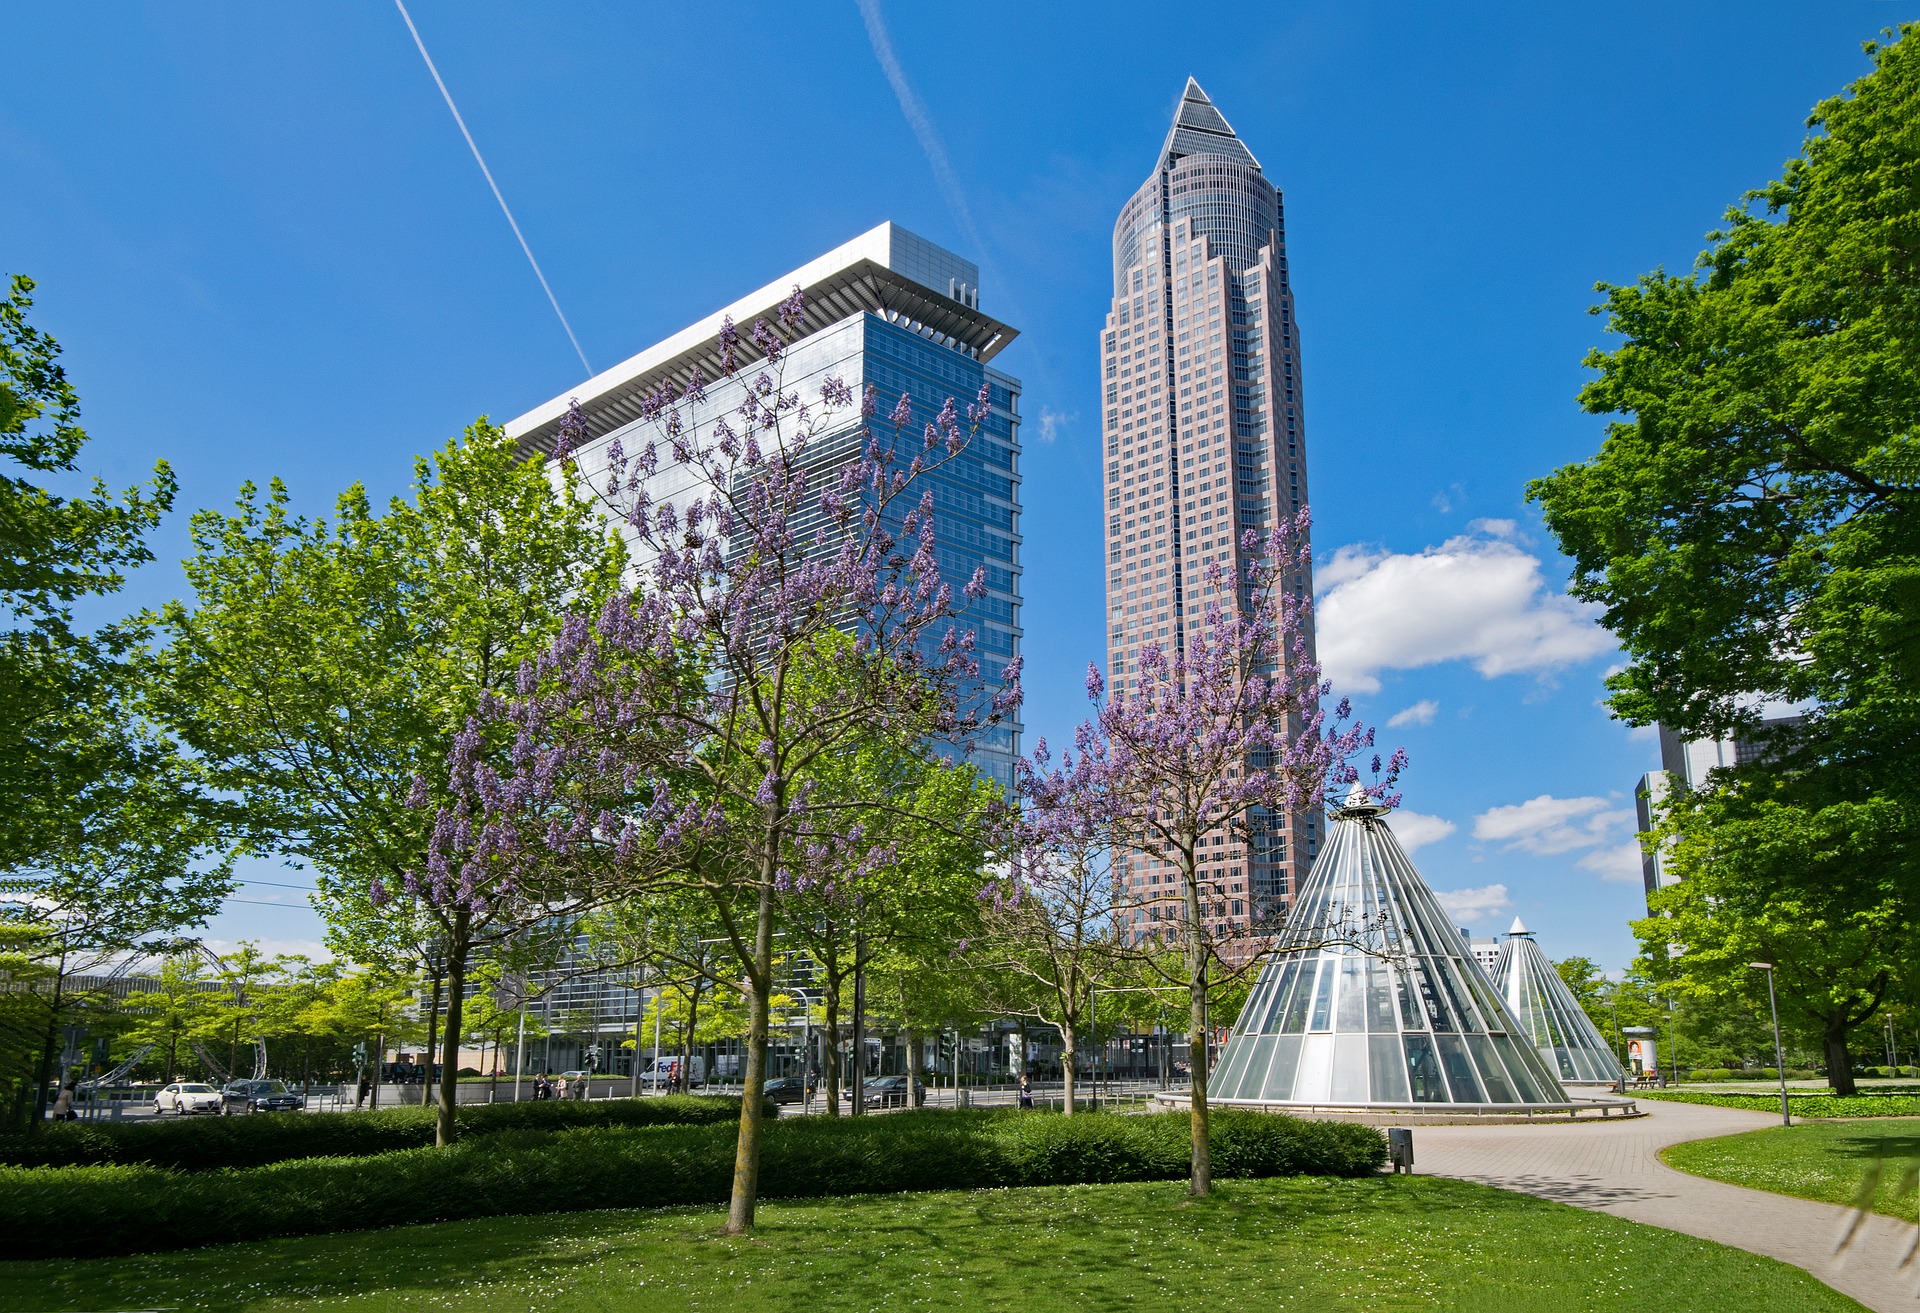 MesseTurm, skyscraper in Frankfurt, Germany